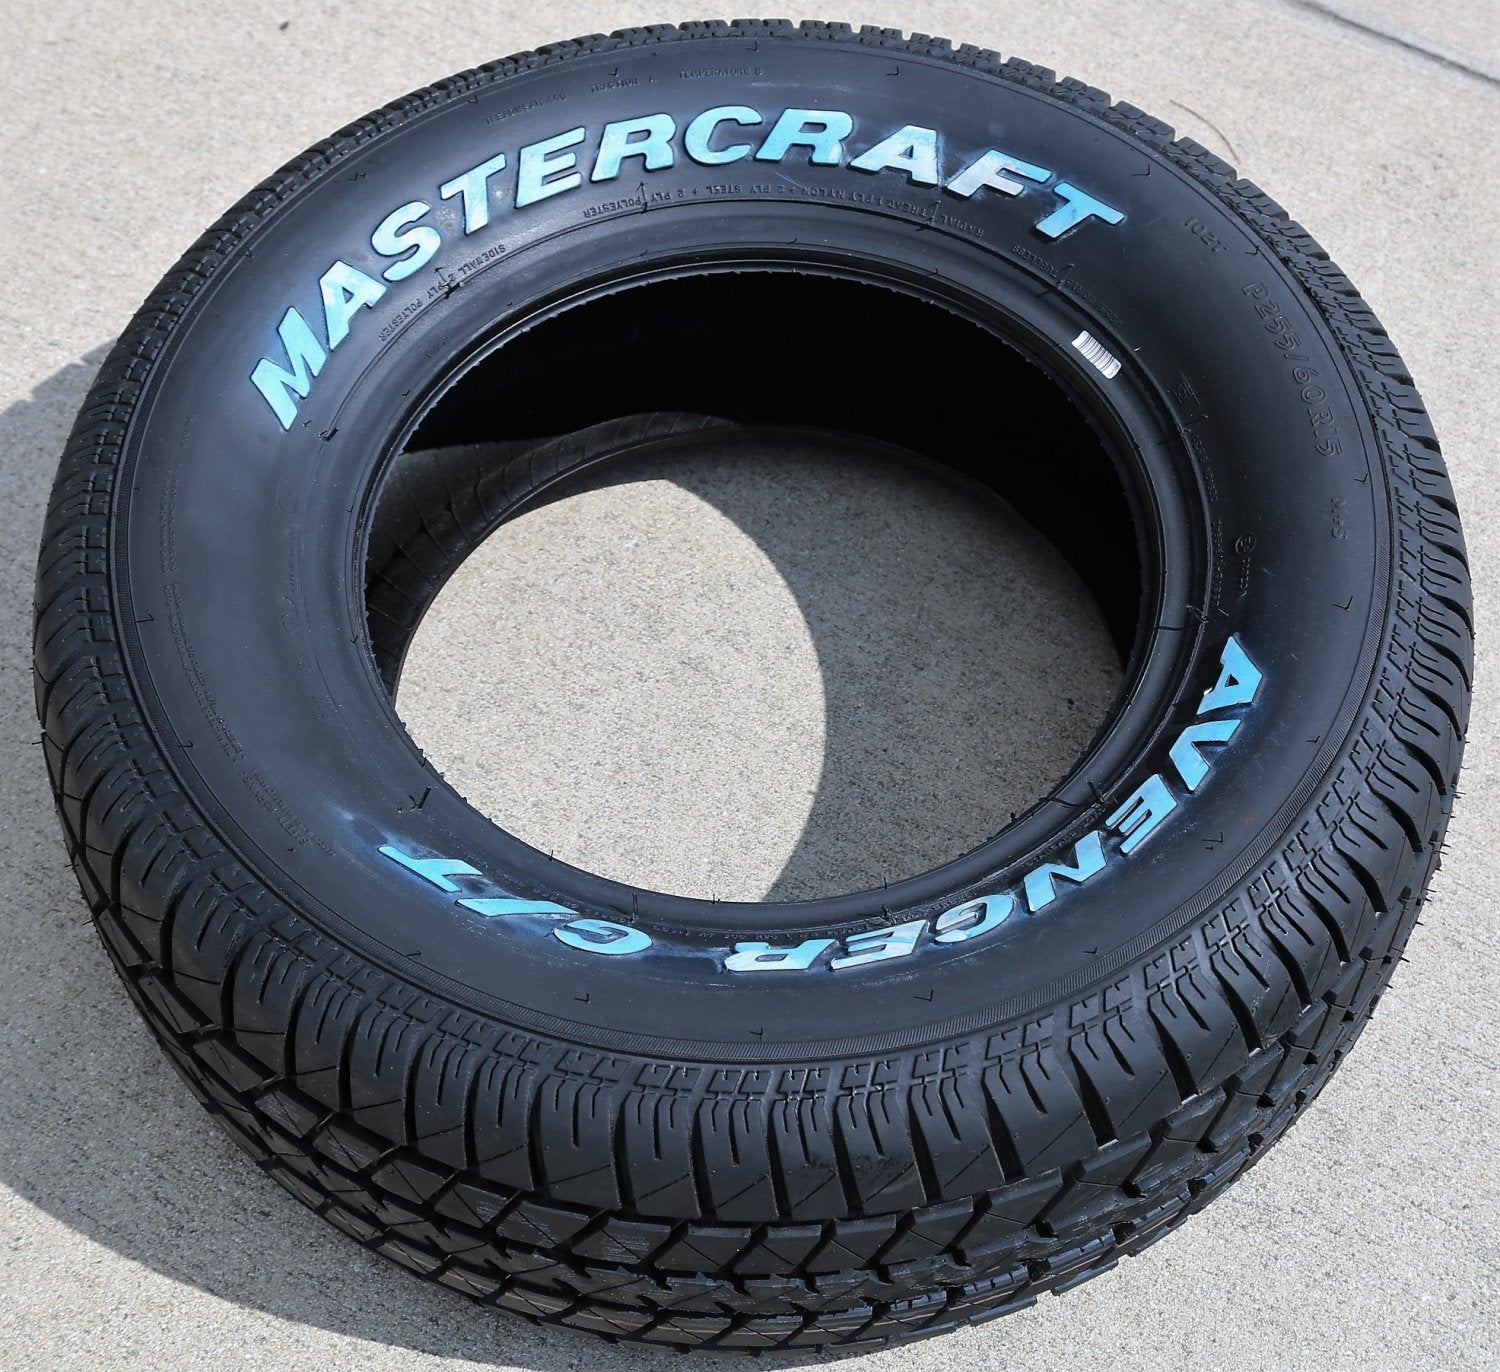 Tire Mastercraft Avenger G/T 255/60R15 102T AS All Season A/S